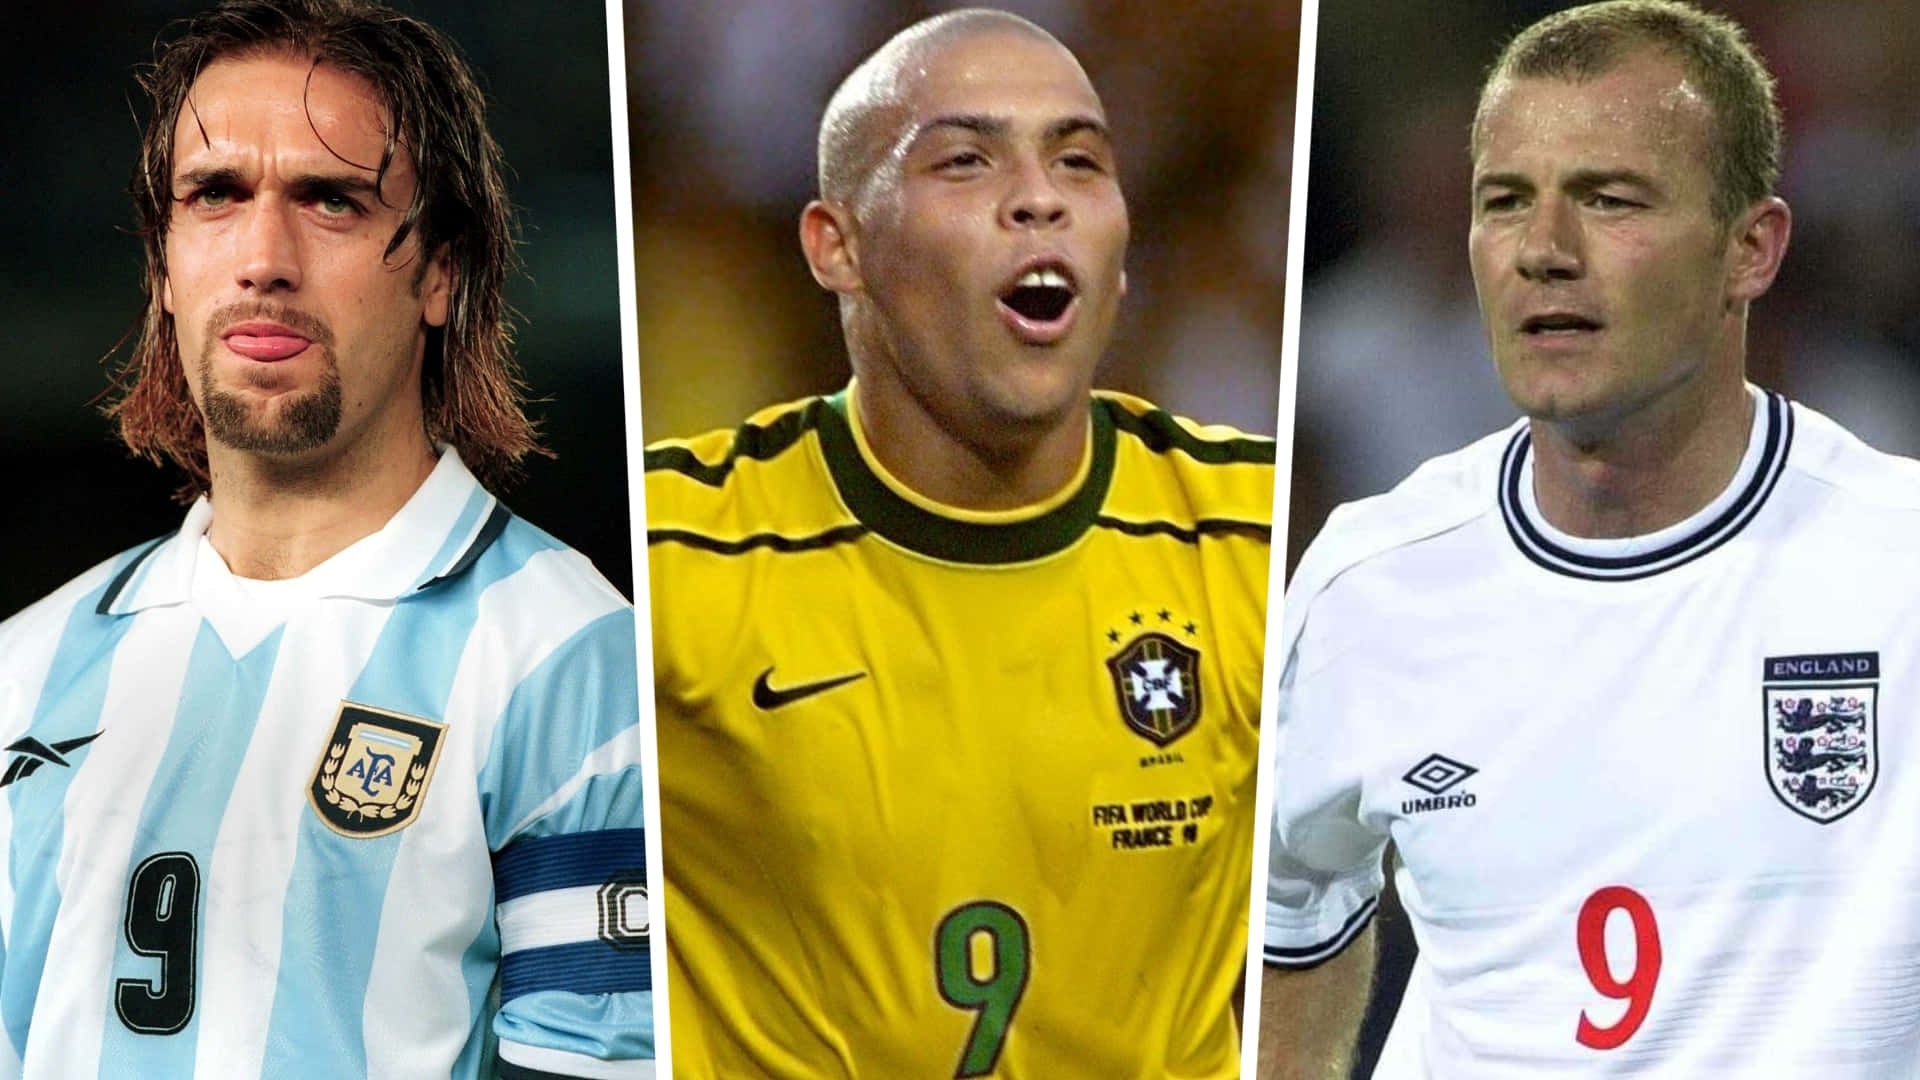 No. 9 Gabriel Batistuta, Ronaldo And Alan Shearer Wallpaper